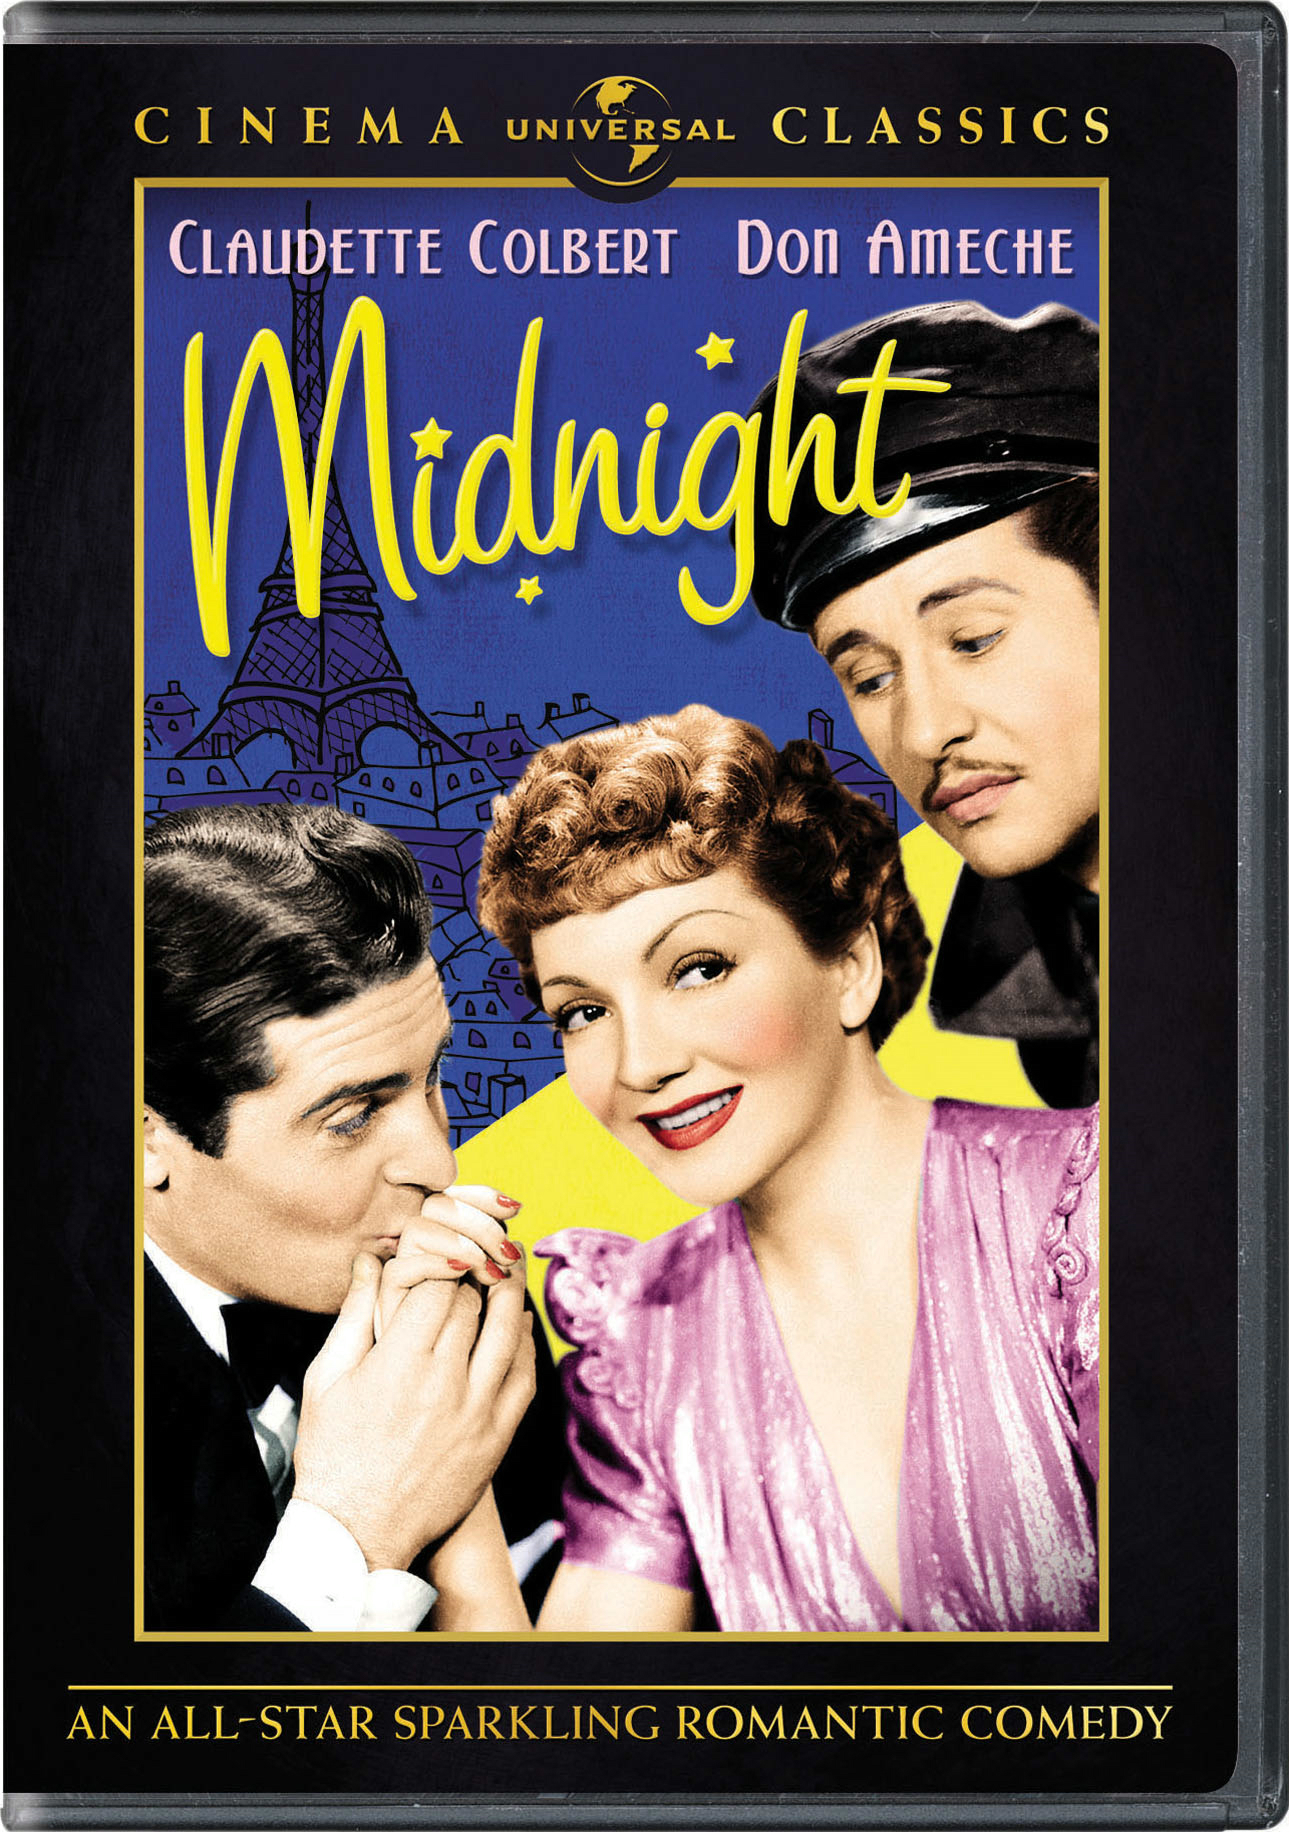 Midnight - DVD [ 1939 ]  - Classic Movies On DVD - Movies On GRUV